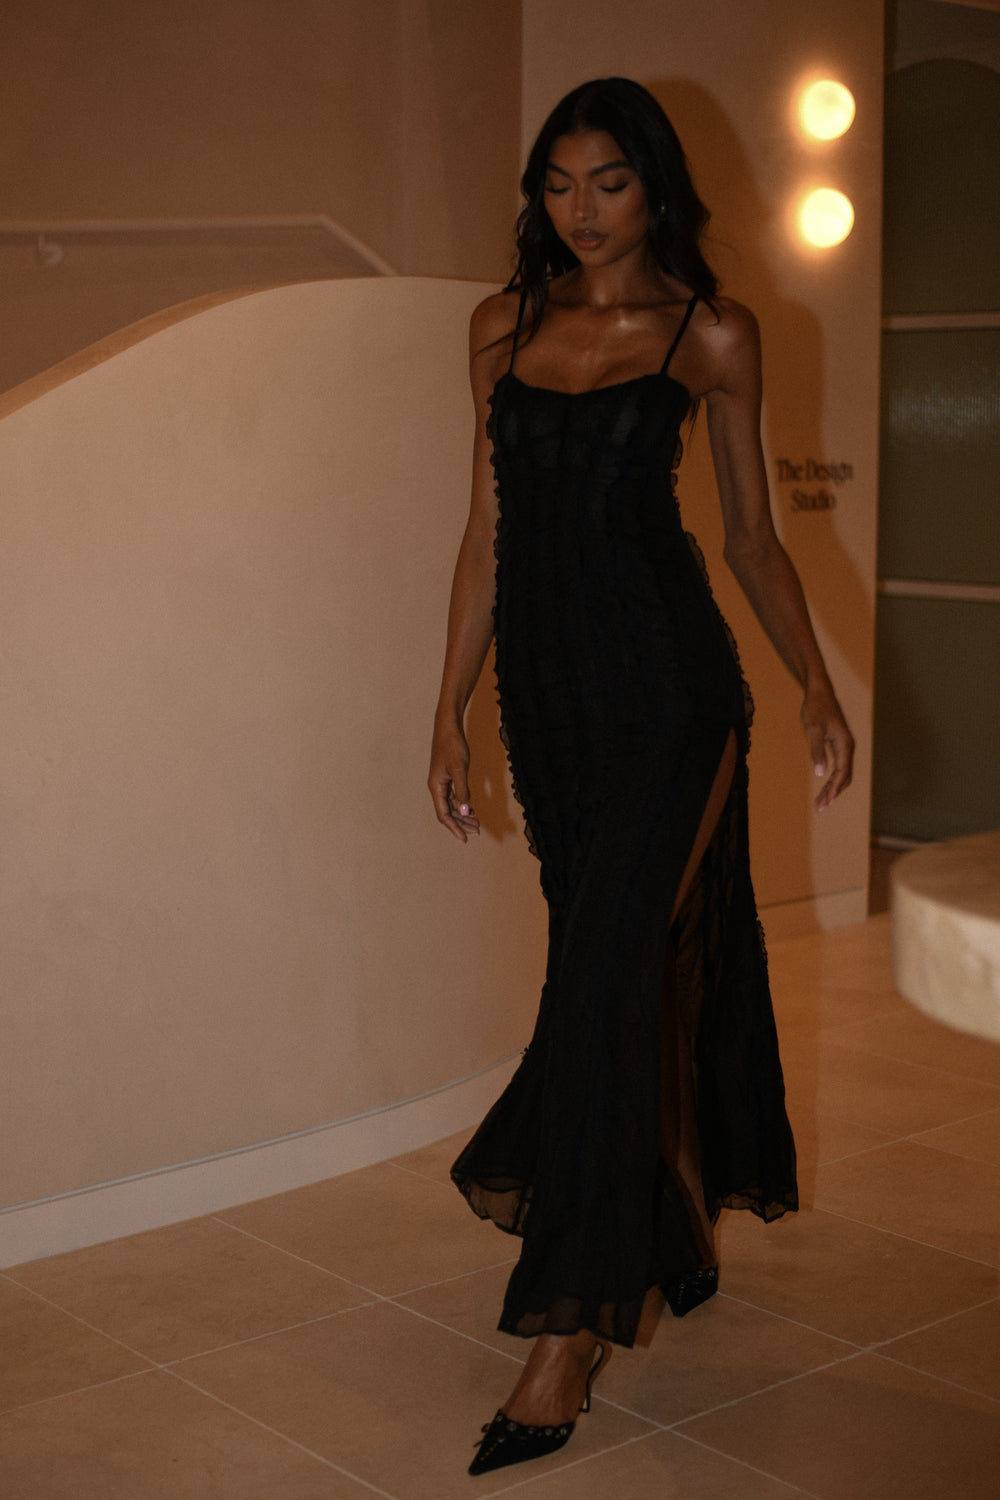 Jacinta Chiffon Maxi Dress - Black